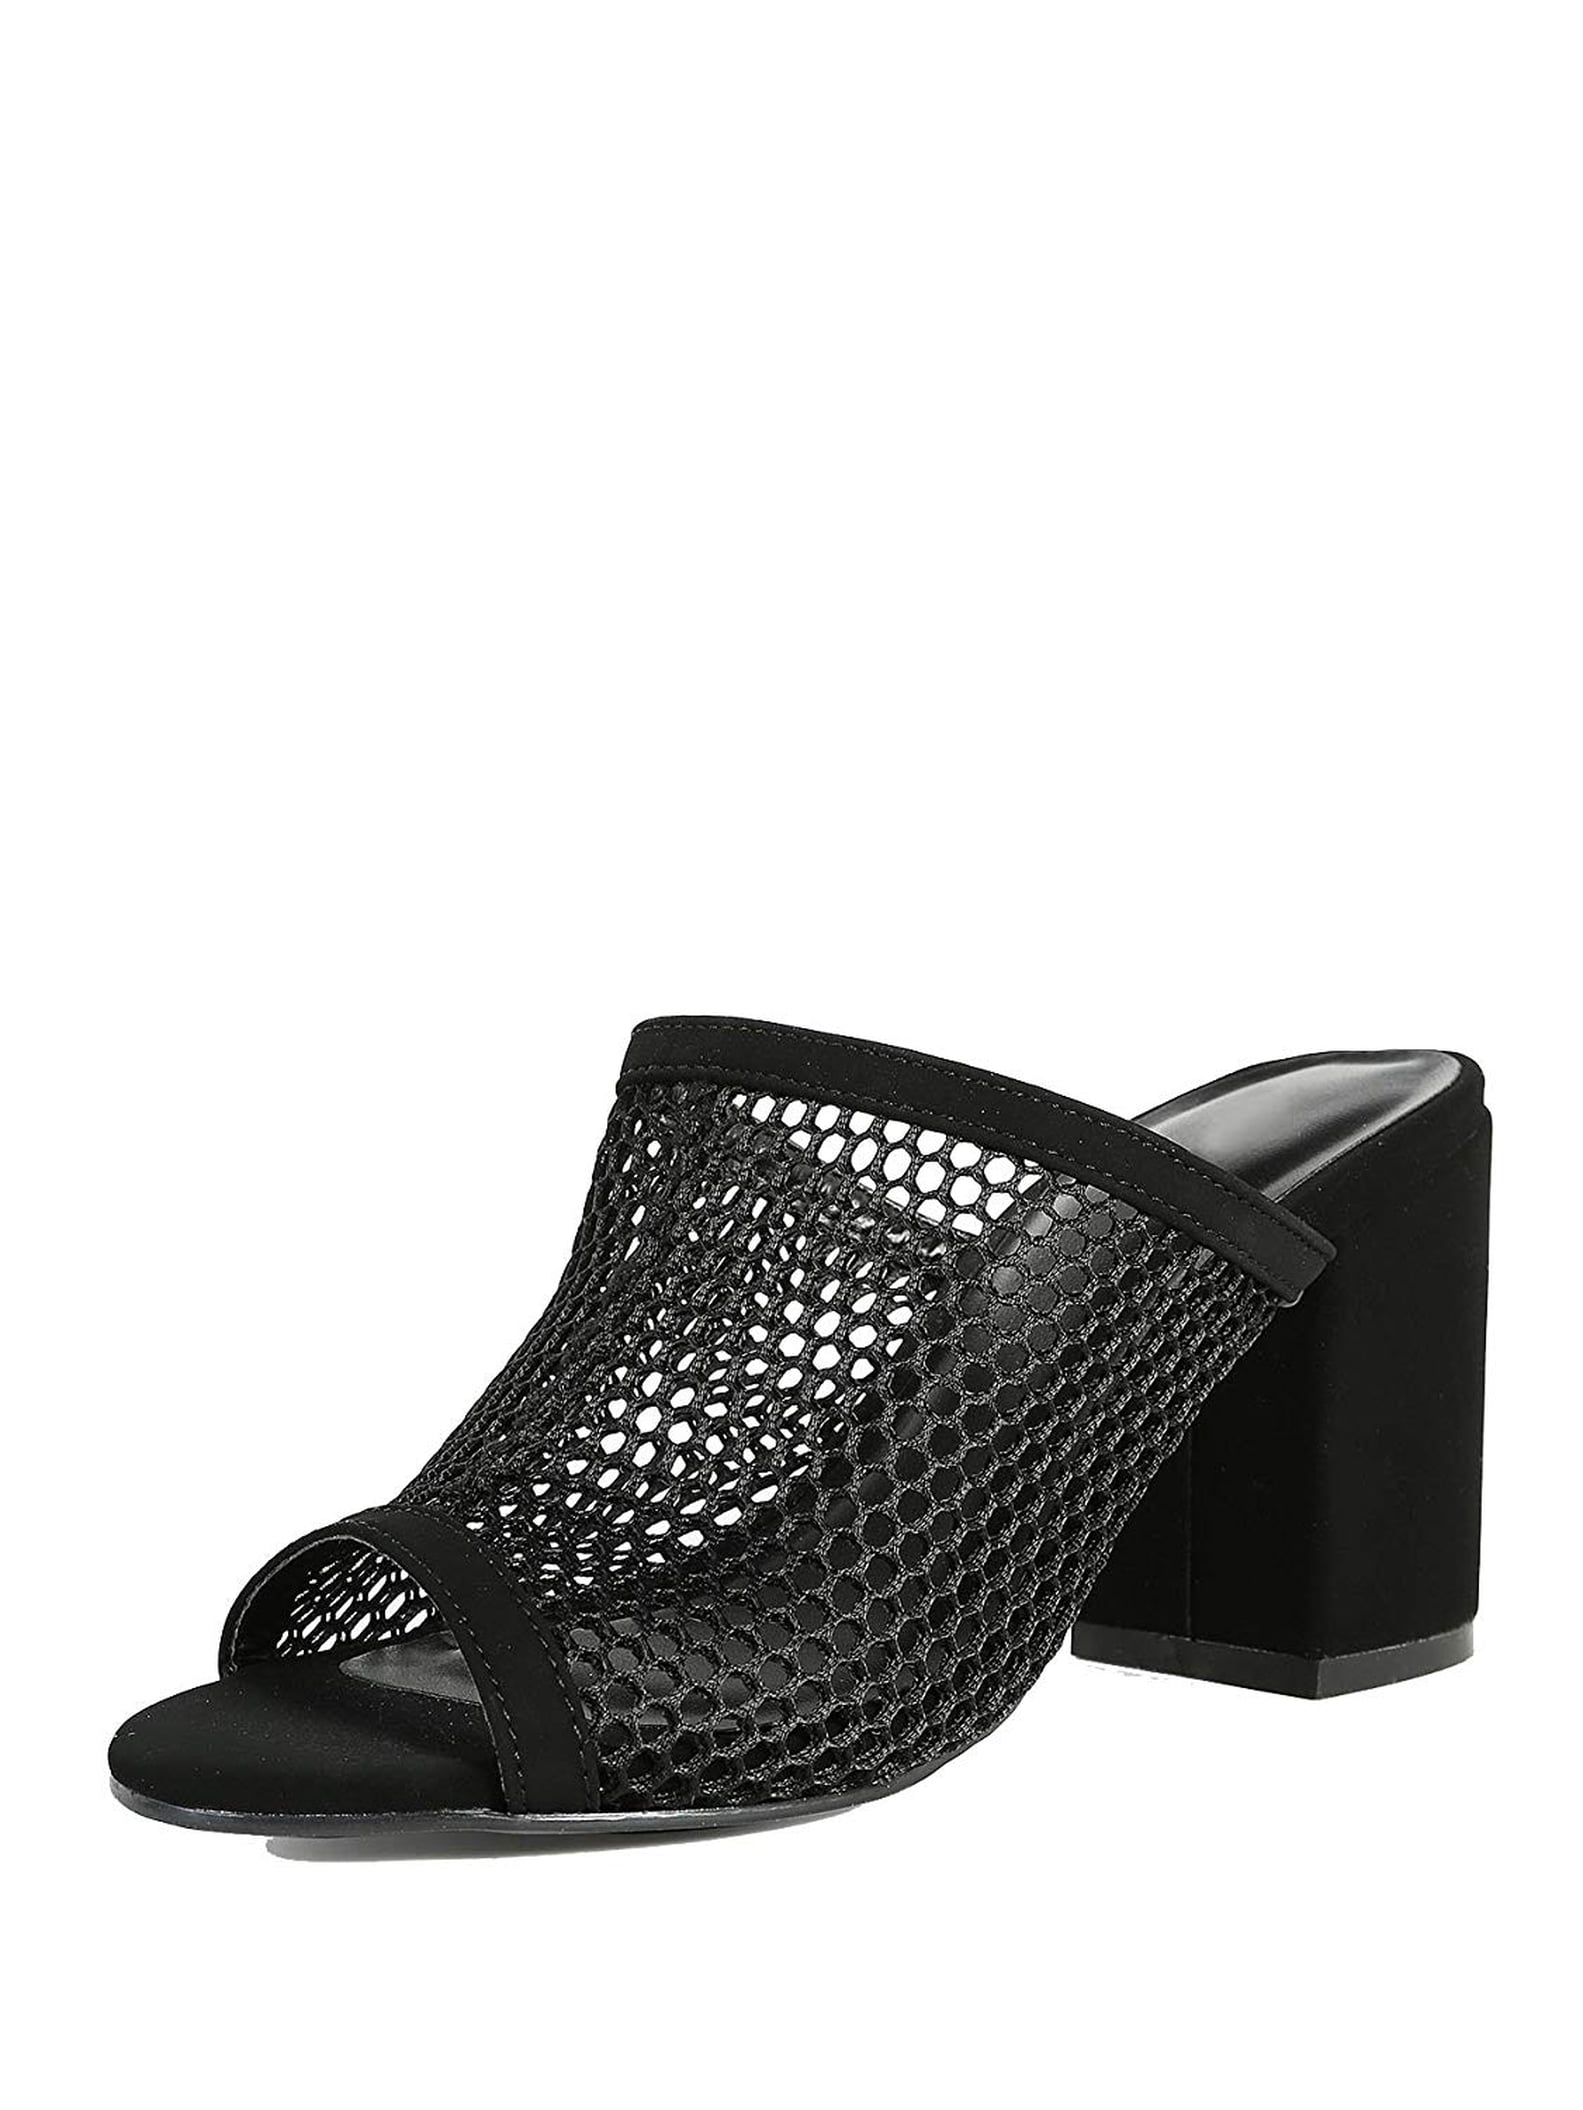 Bella Hadid's Black Mesh Sandals | POPSUGAR Fashion